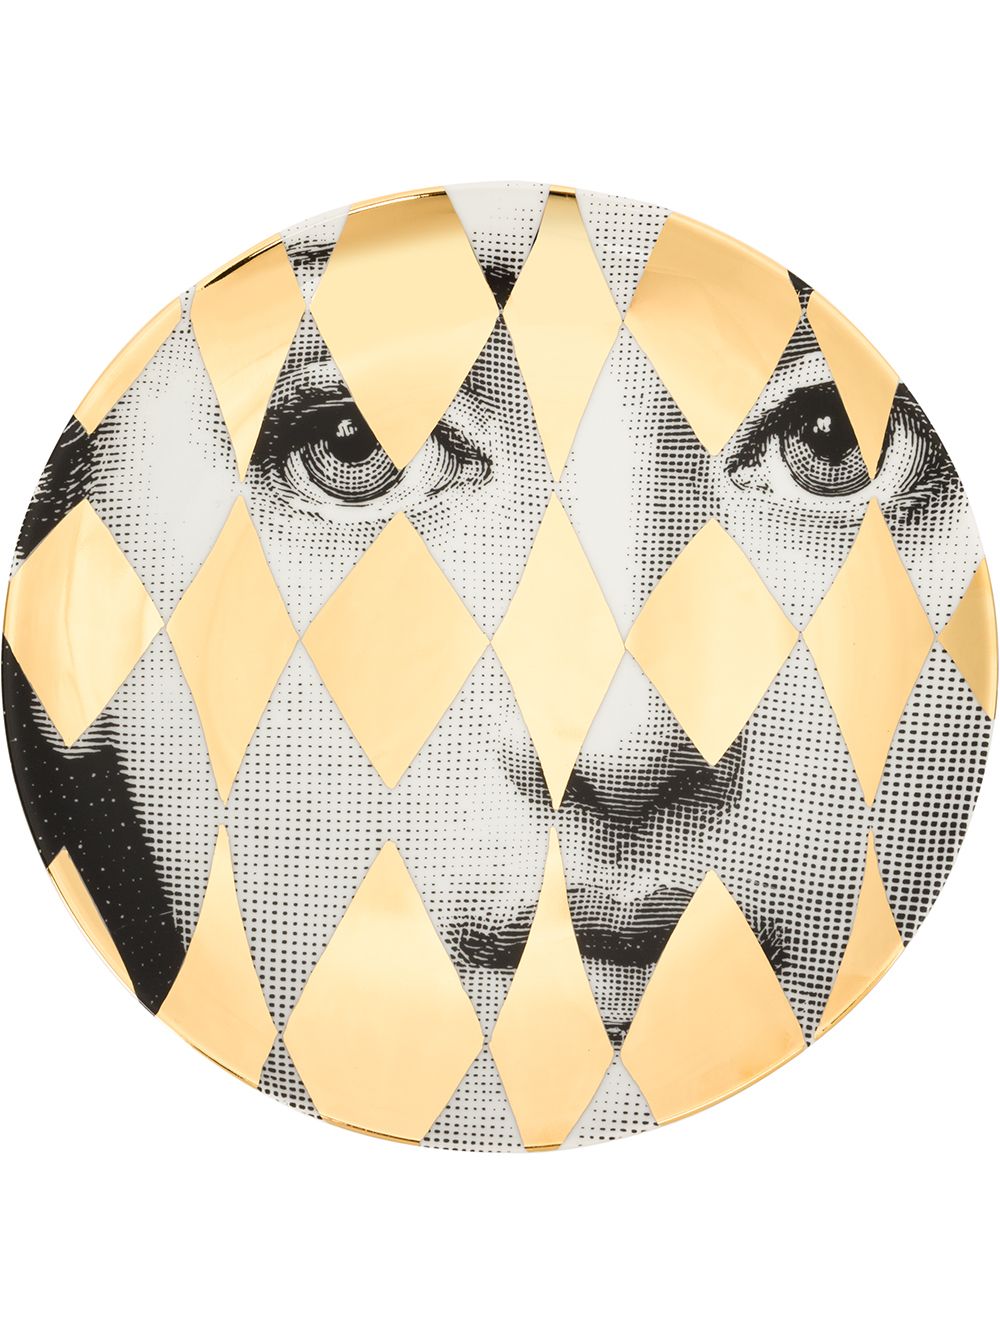 Fornasetti printed face plate - Gold von Fornasetti